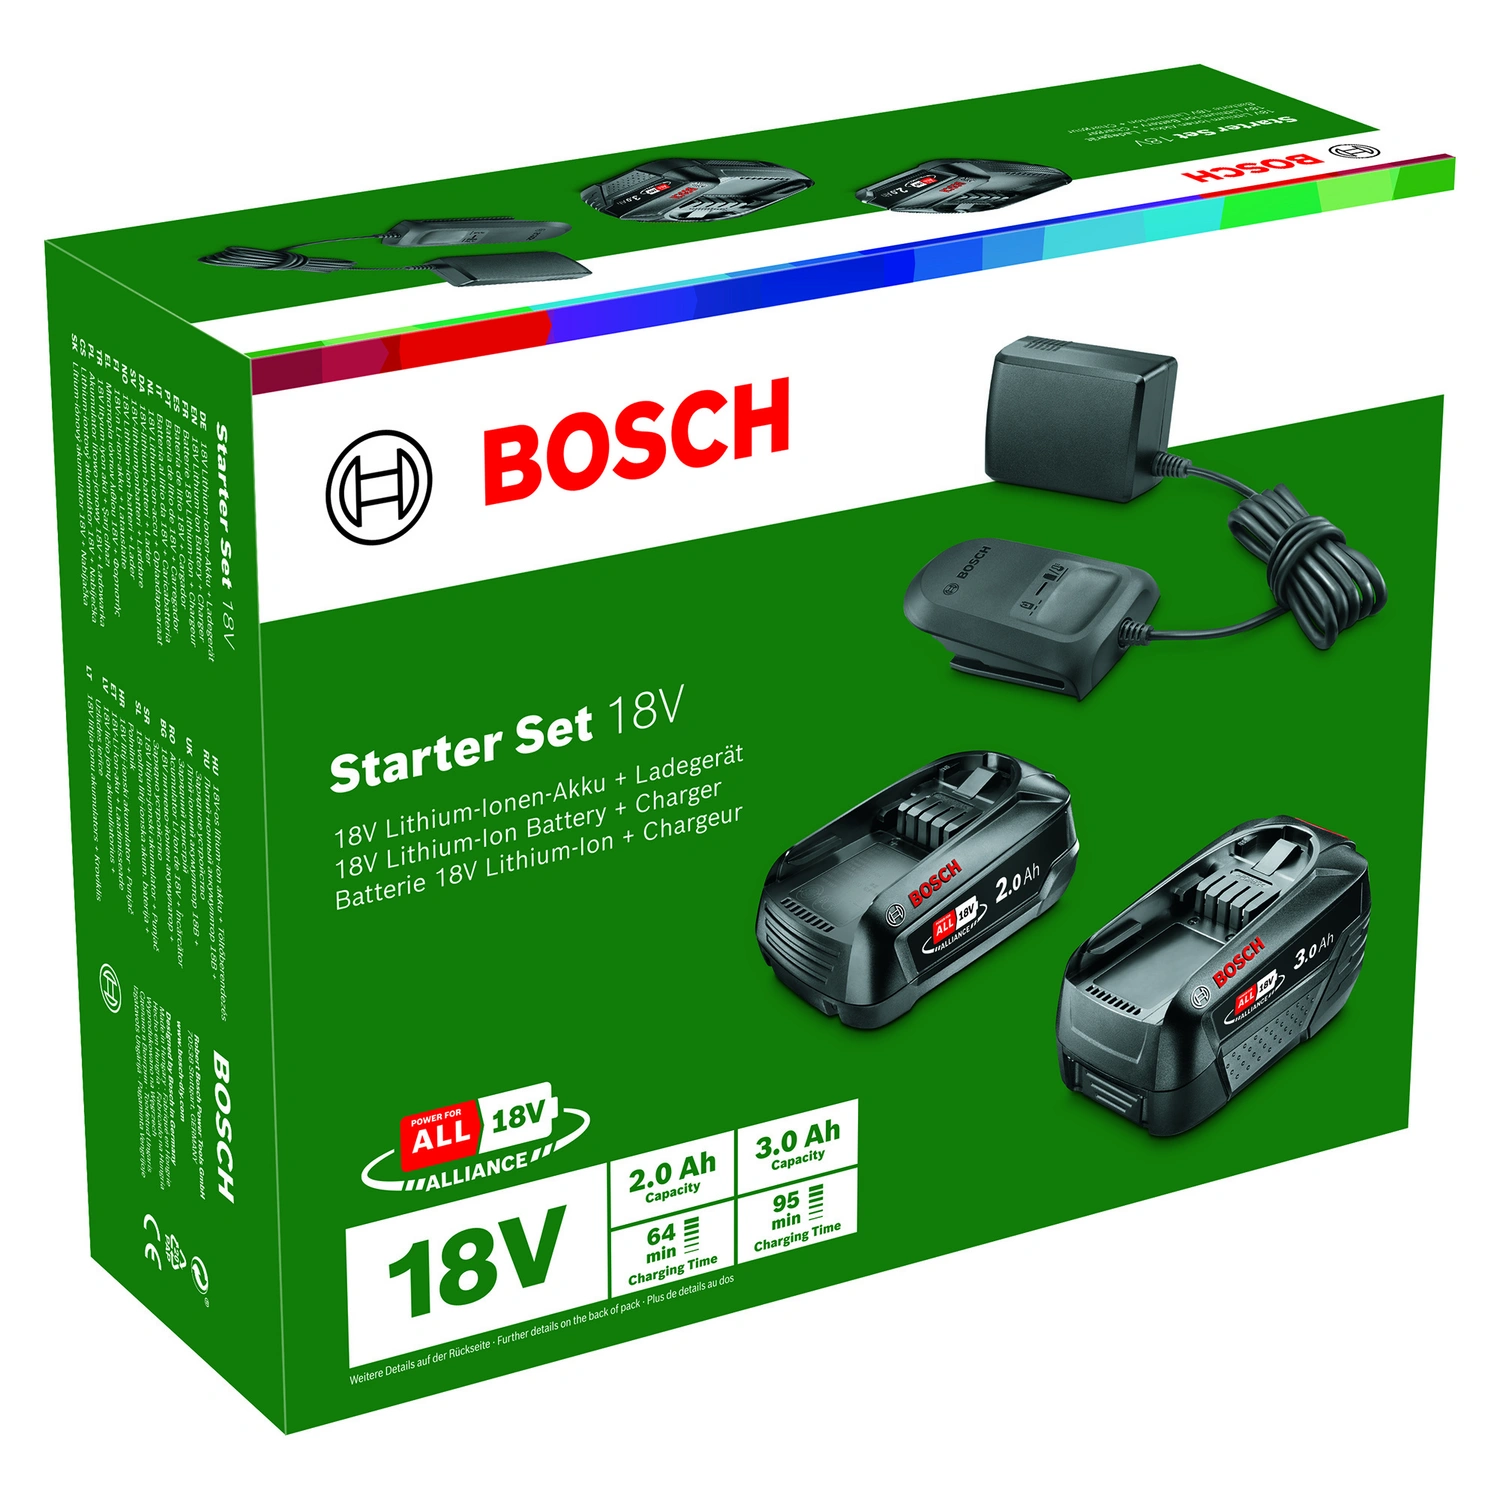 Hagebau Nadlinger - Bosch Batterie Starter Set 18 V 2.5 Ah